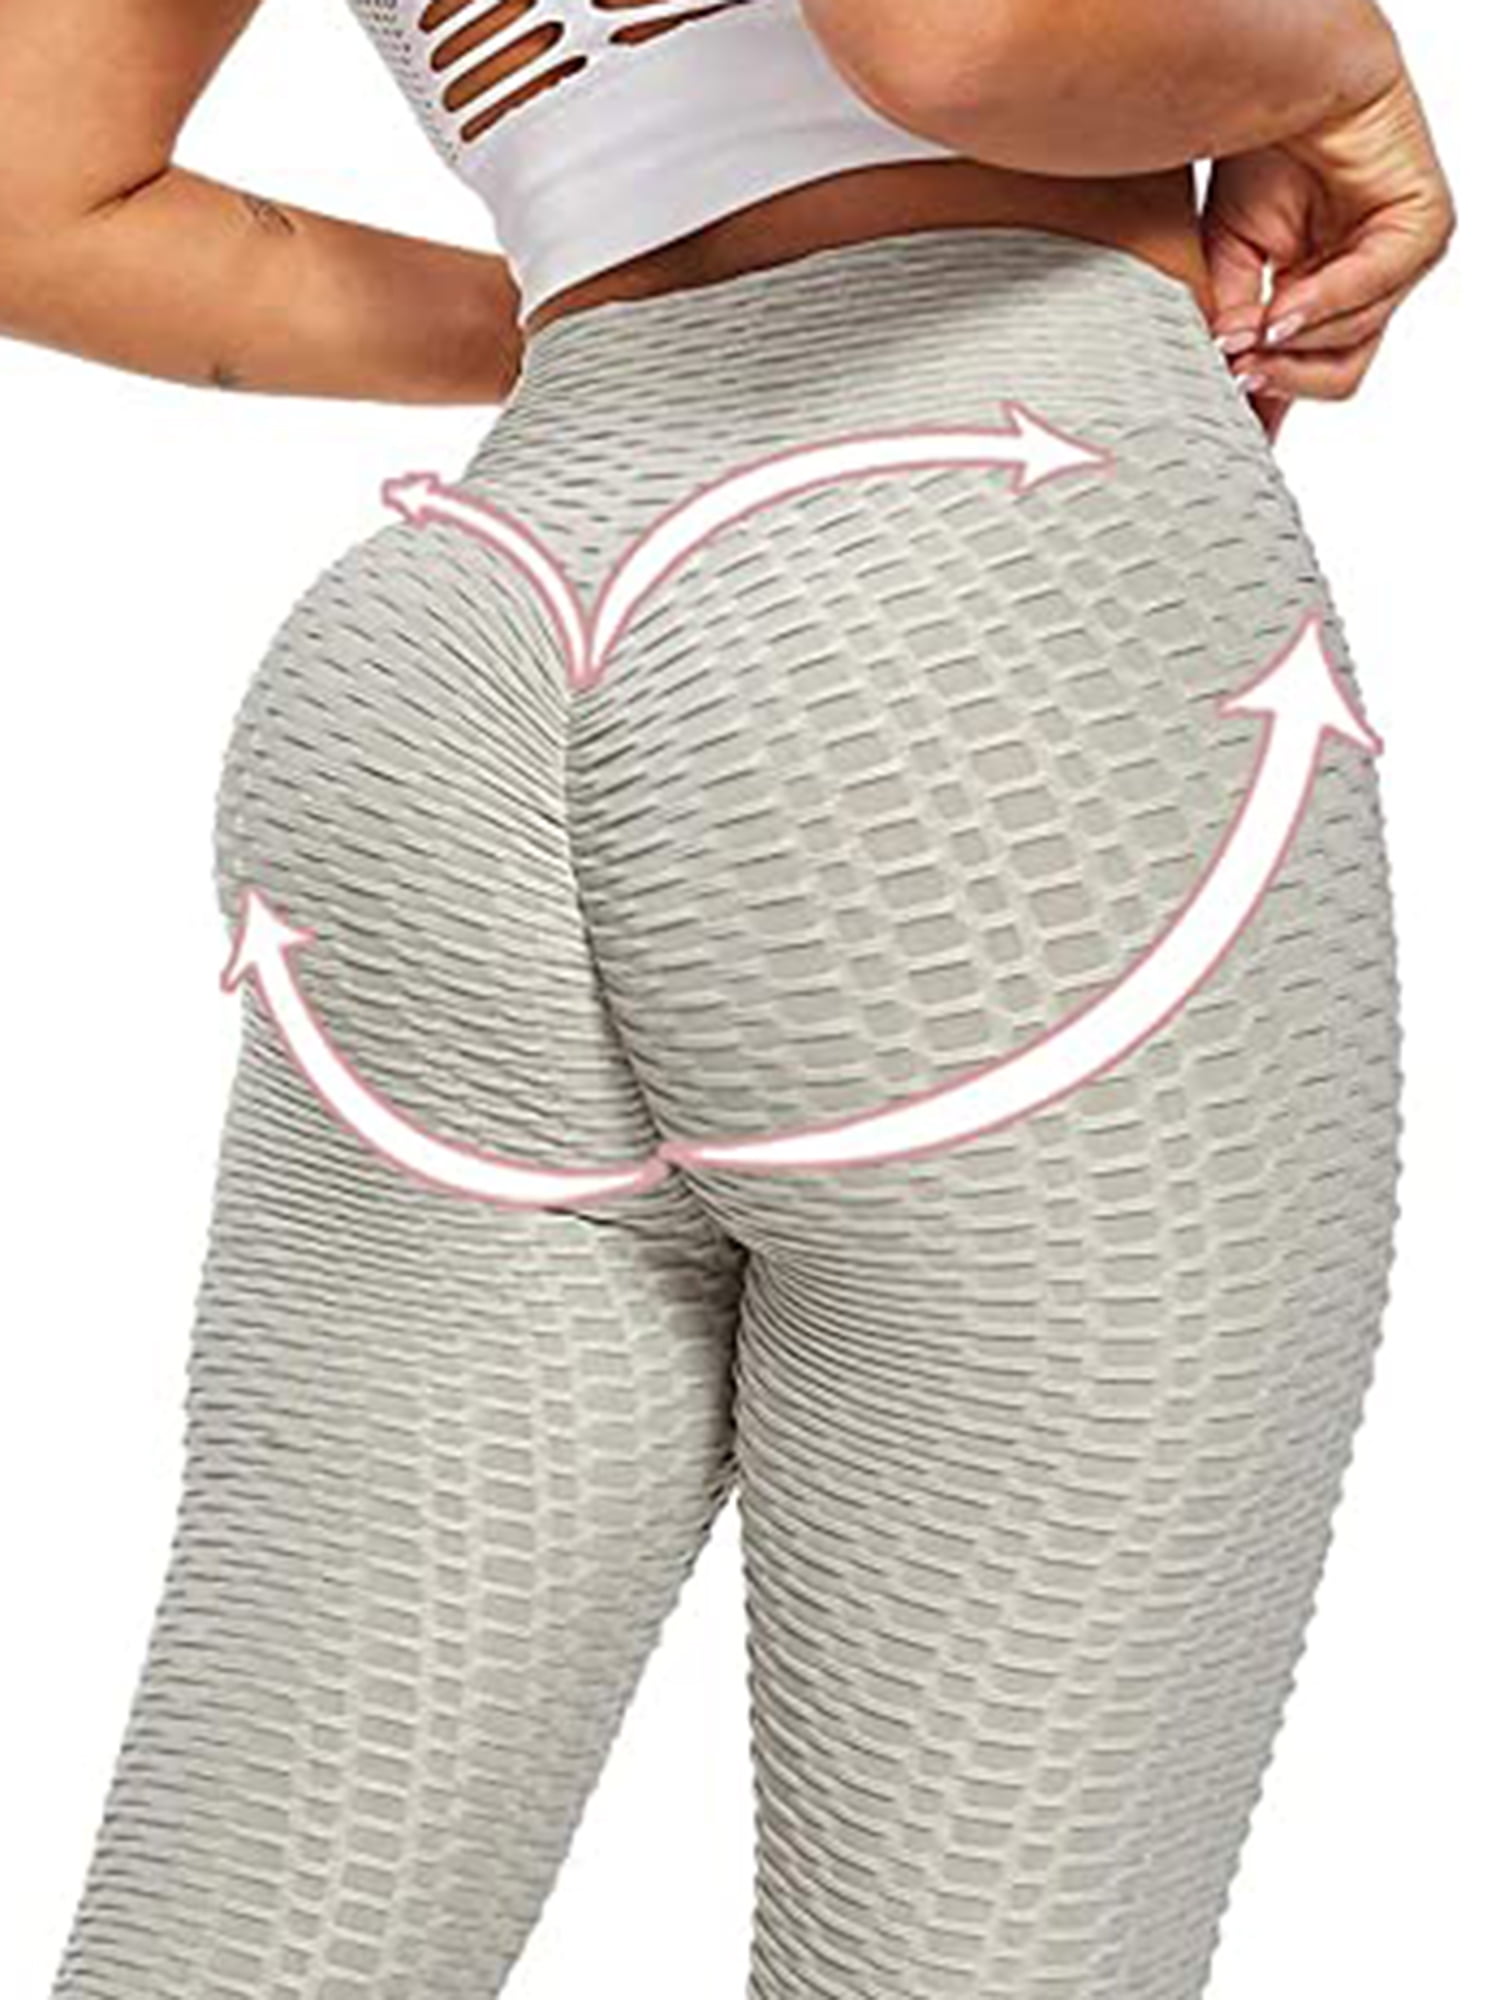 LELINTA Women Sports Yoga Workout Gym Fitness Tummy Control Leggings Pants  Butt Lifting Athletic Clothes, Light Grey, S-XL 